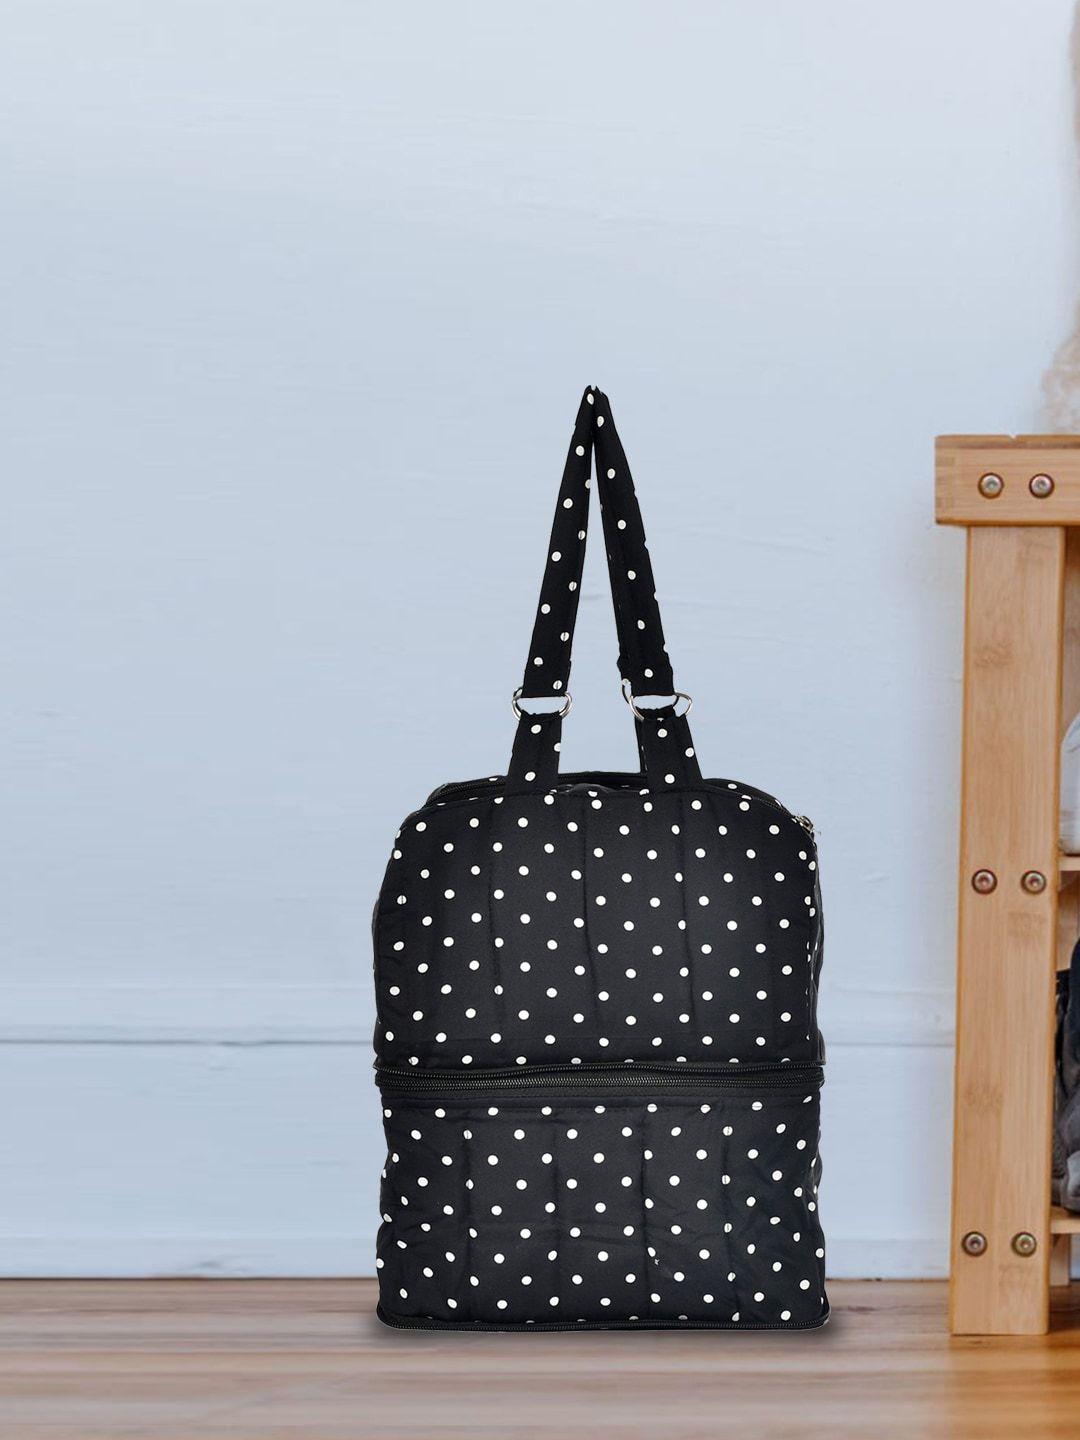 kuber industries black polka dots printed cotton travel toiletry bag